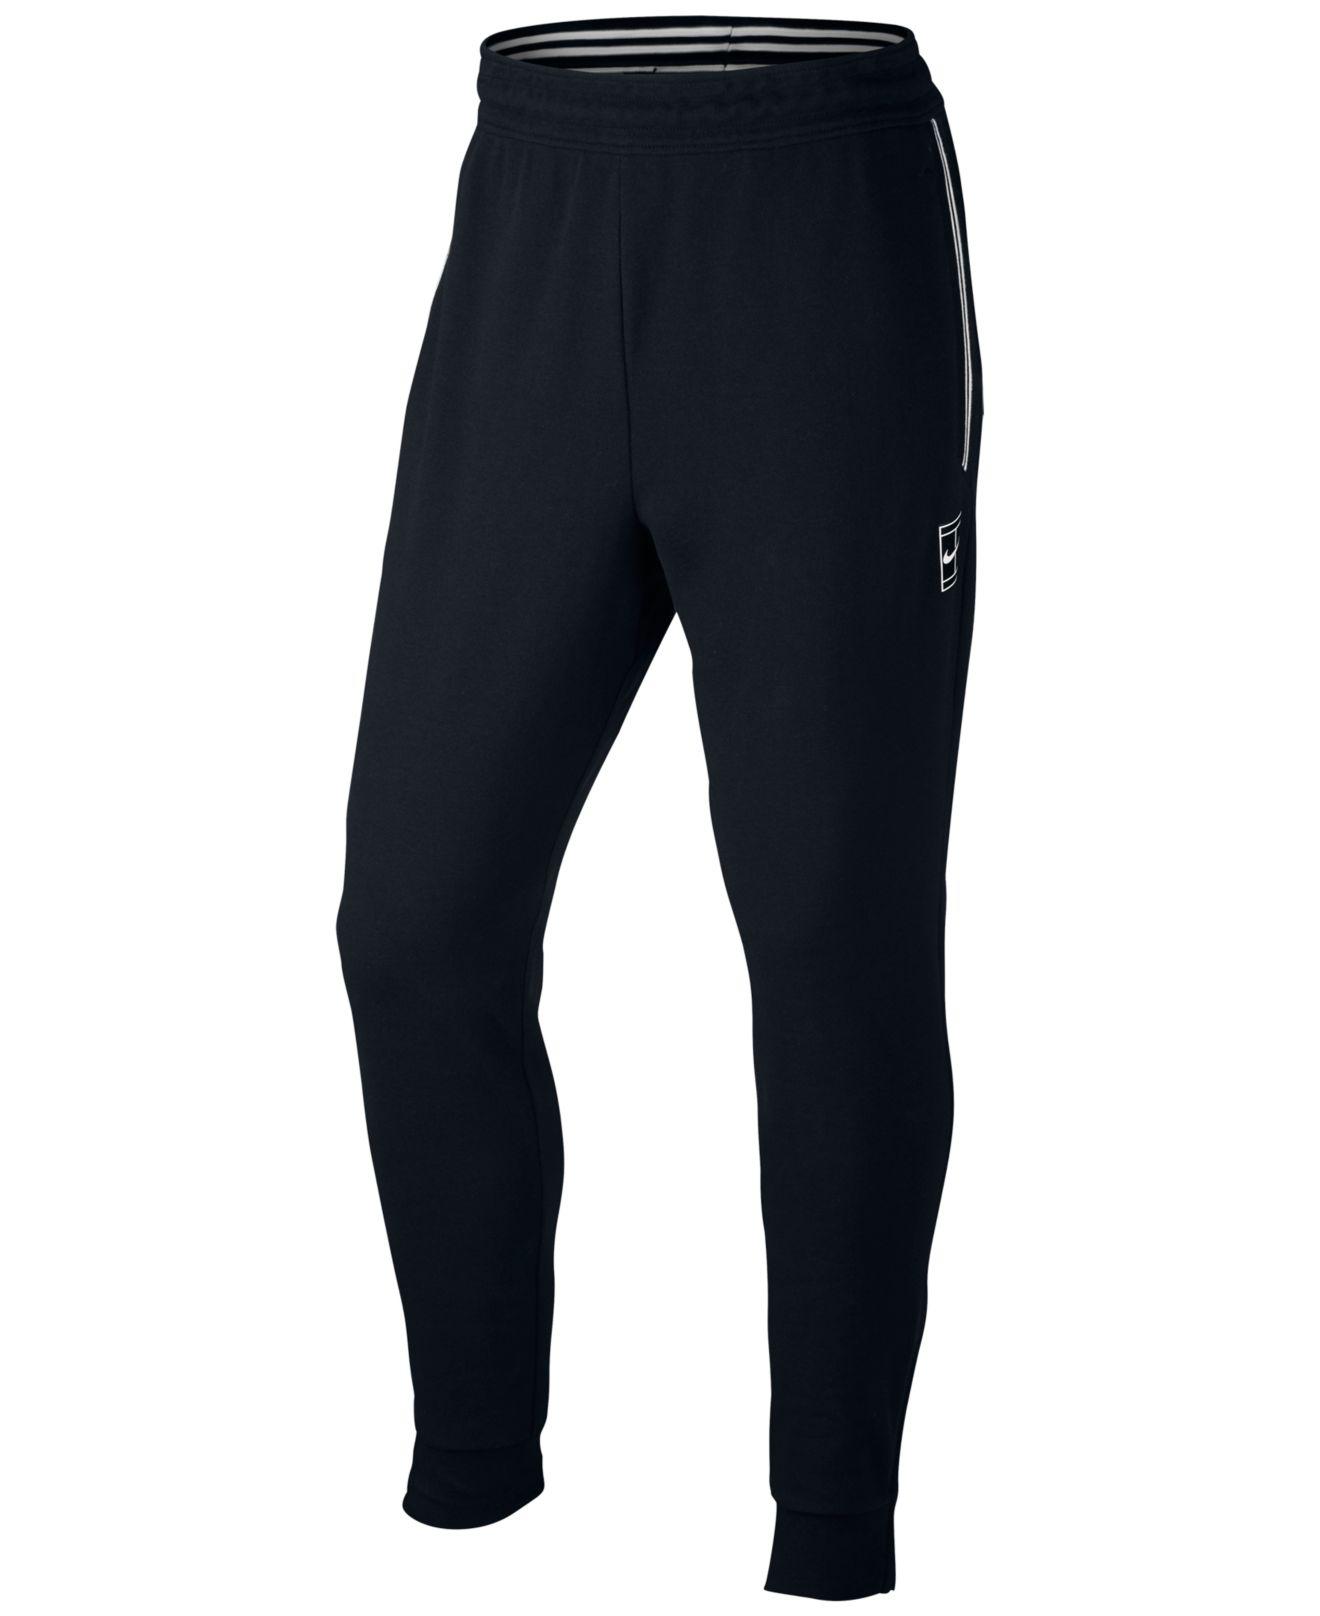 Nike Synthetic Men's Court Dri-fit Tennis Pants in Black for Men - Lyst